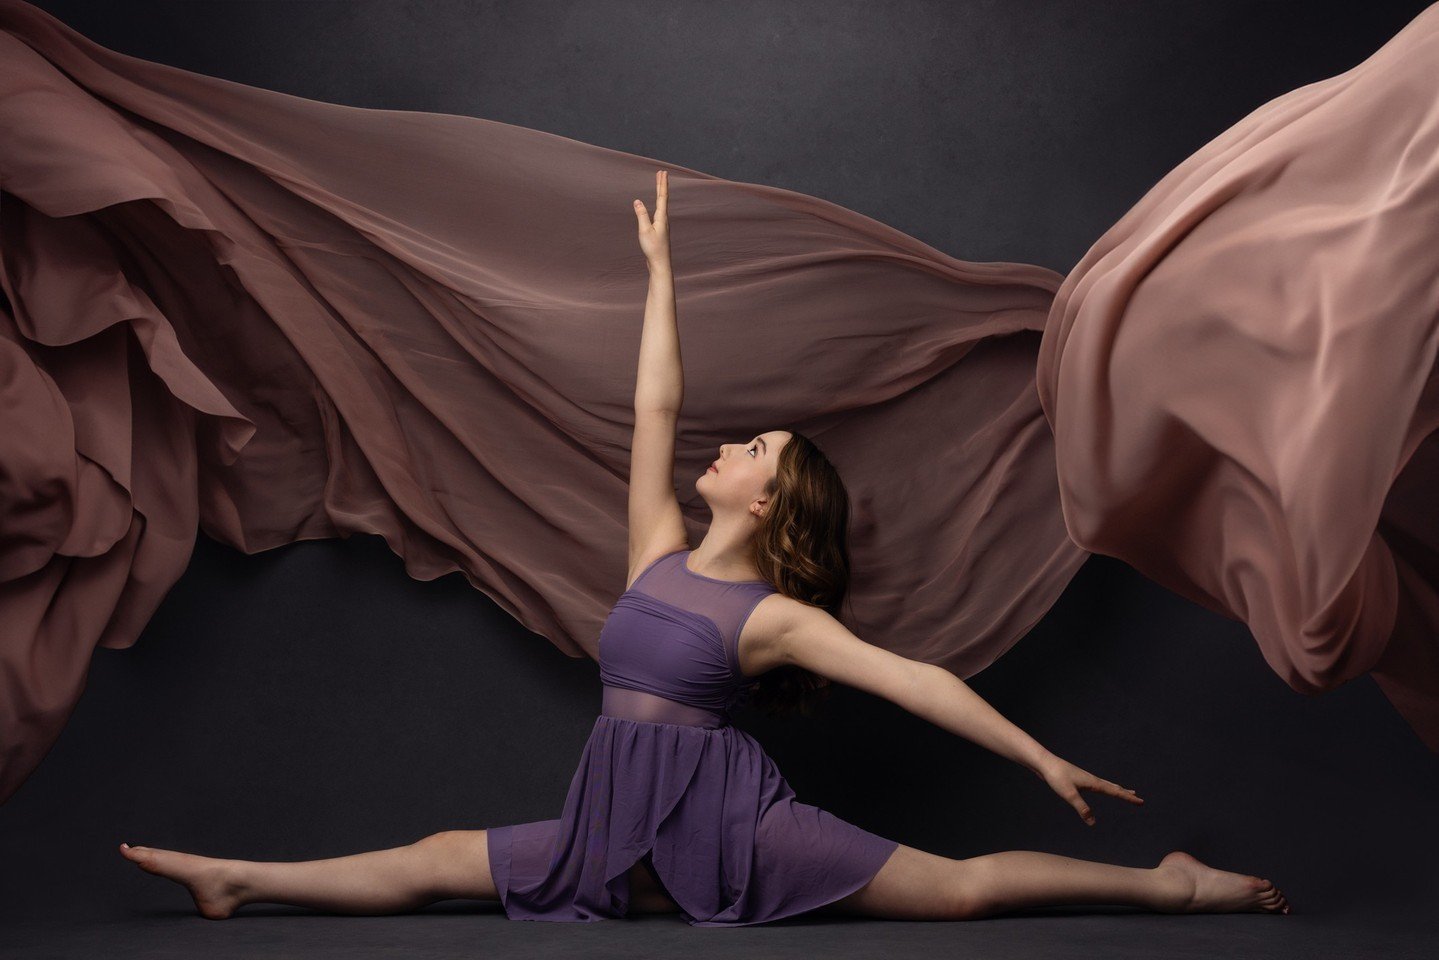 Sofia shines with beauty and poise, a true inspiration as a ballerina. 🌟🩰 #BalletGrace